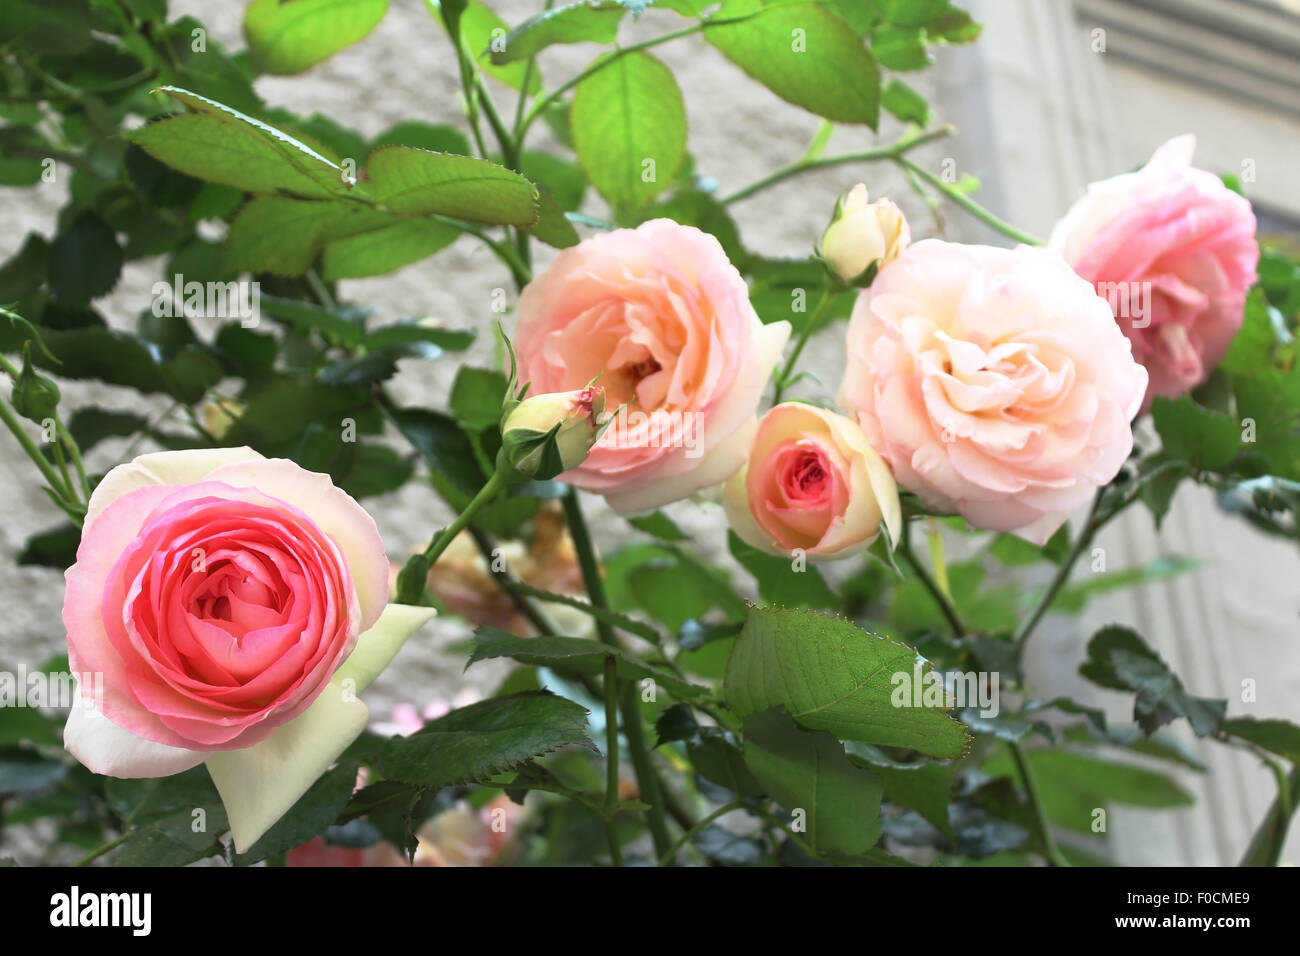 peach-colored roses on a rosebush Stock Photo